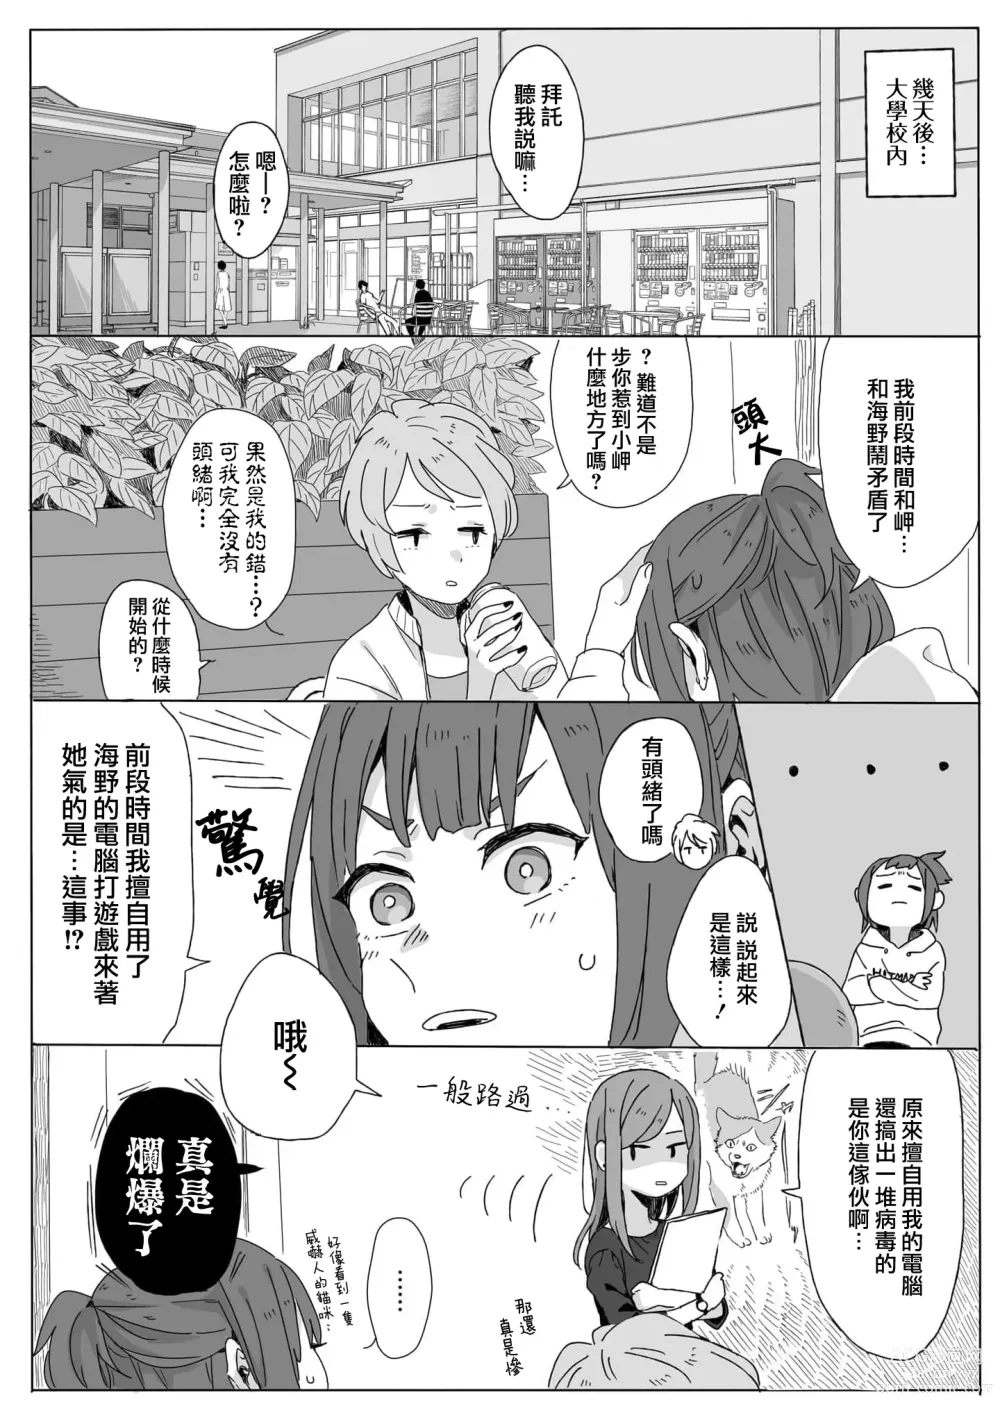 Page 6 of manga 山内小姐和海野小姐的回合。